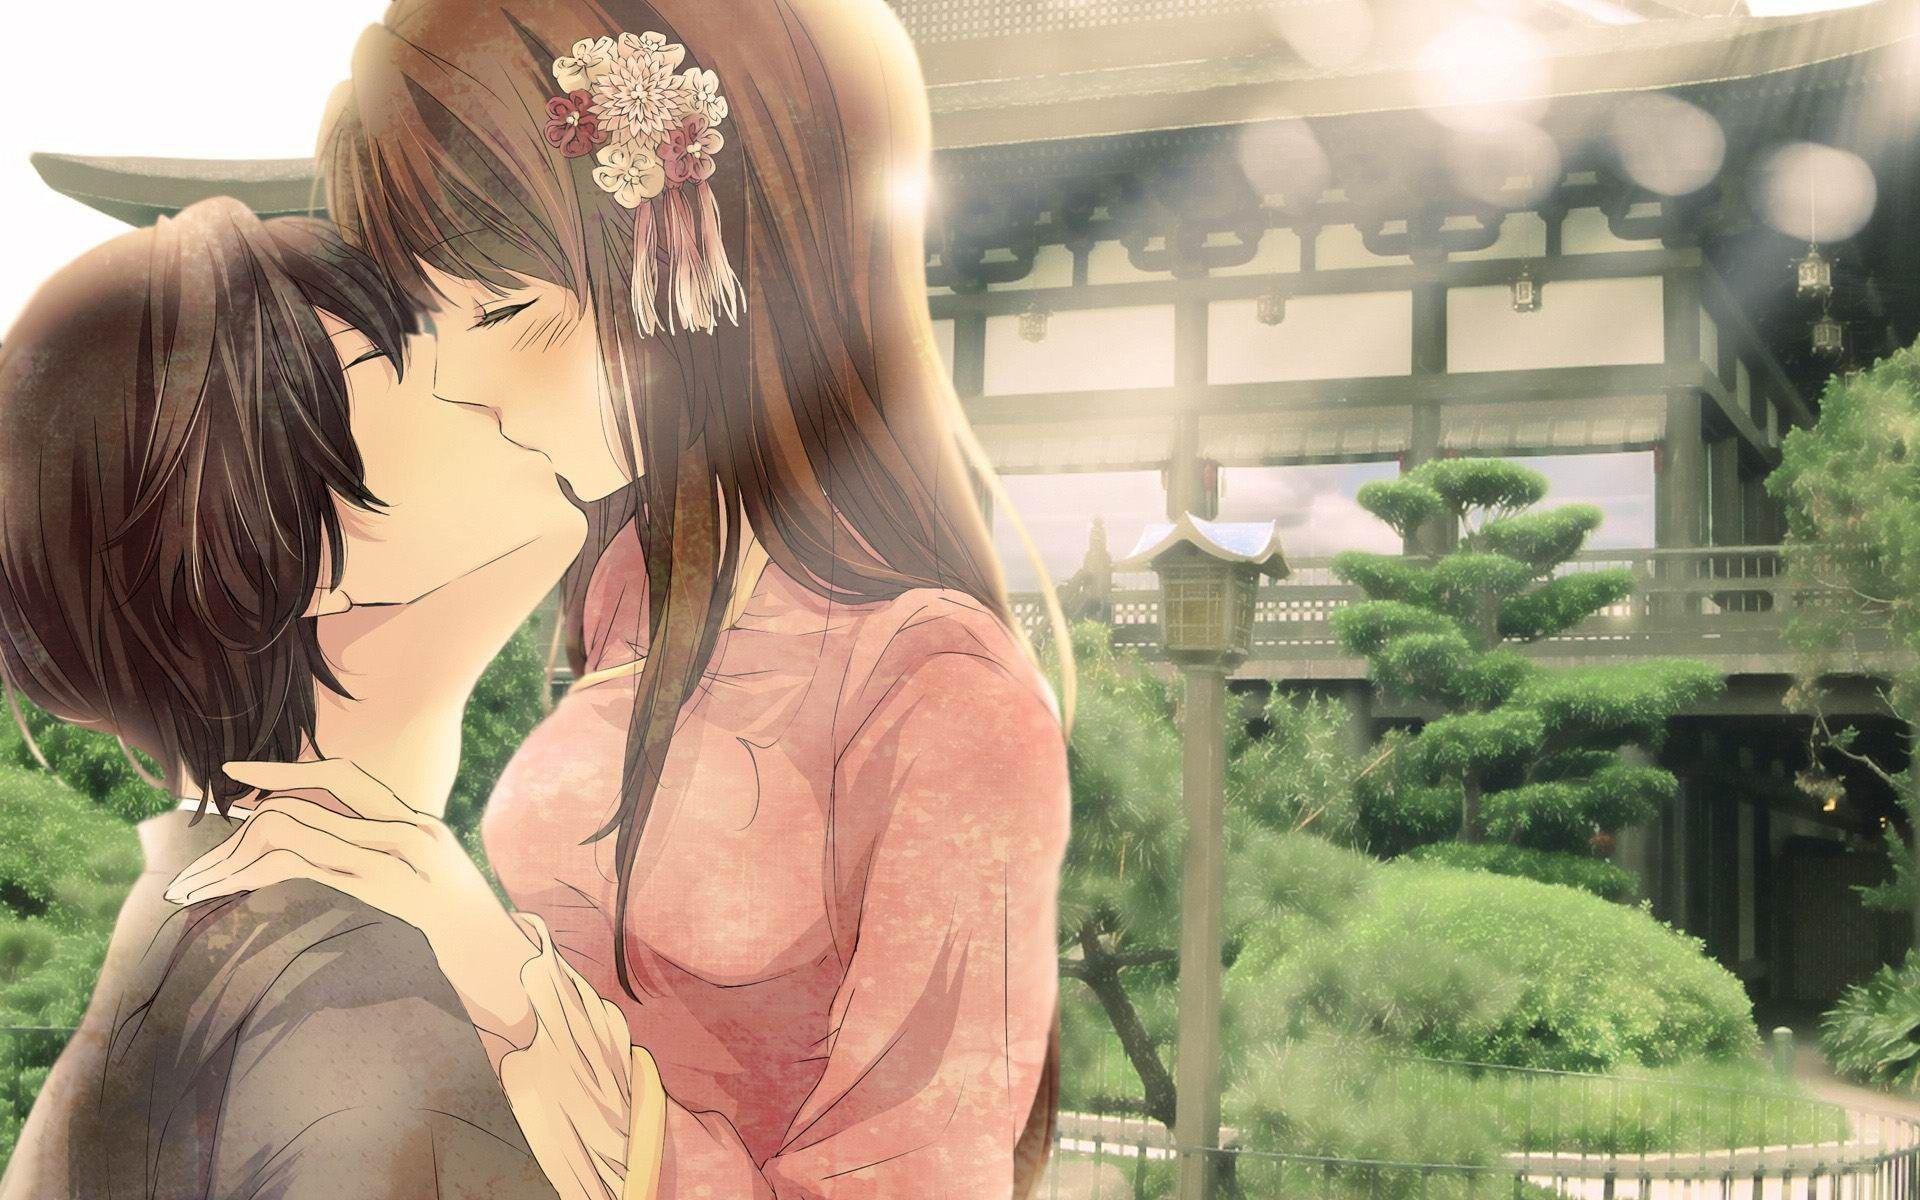 Kissing Anime Couple Anime Girl Boy Cute Kiss Poster by ChriizzGoku